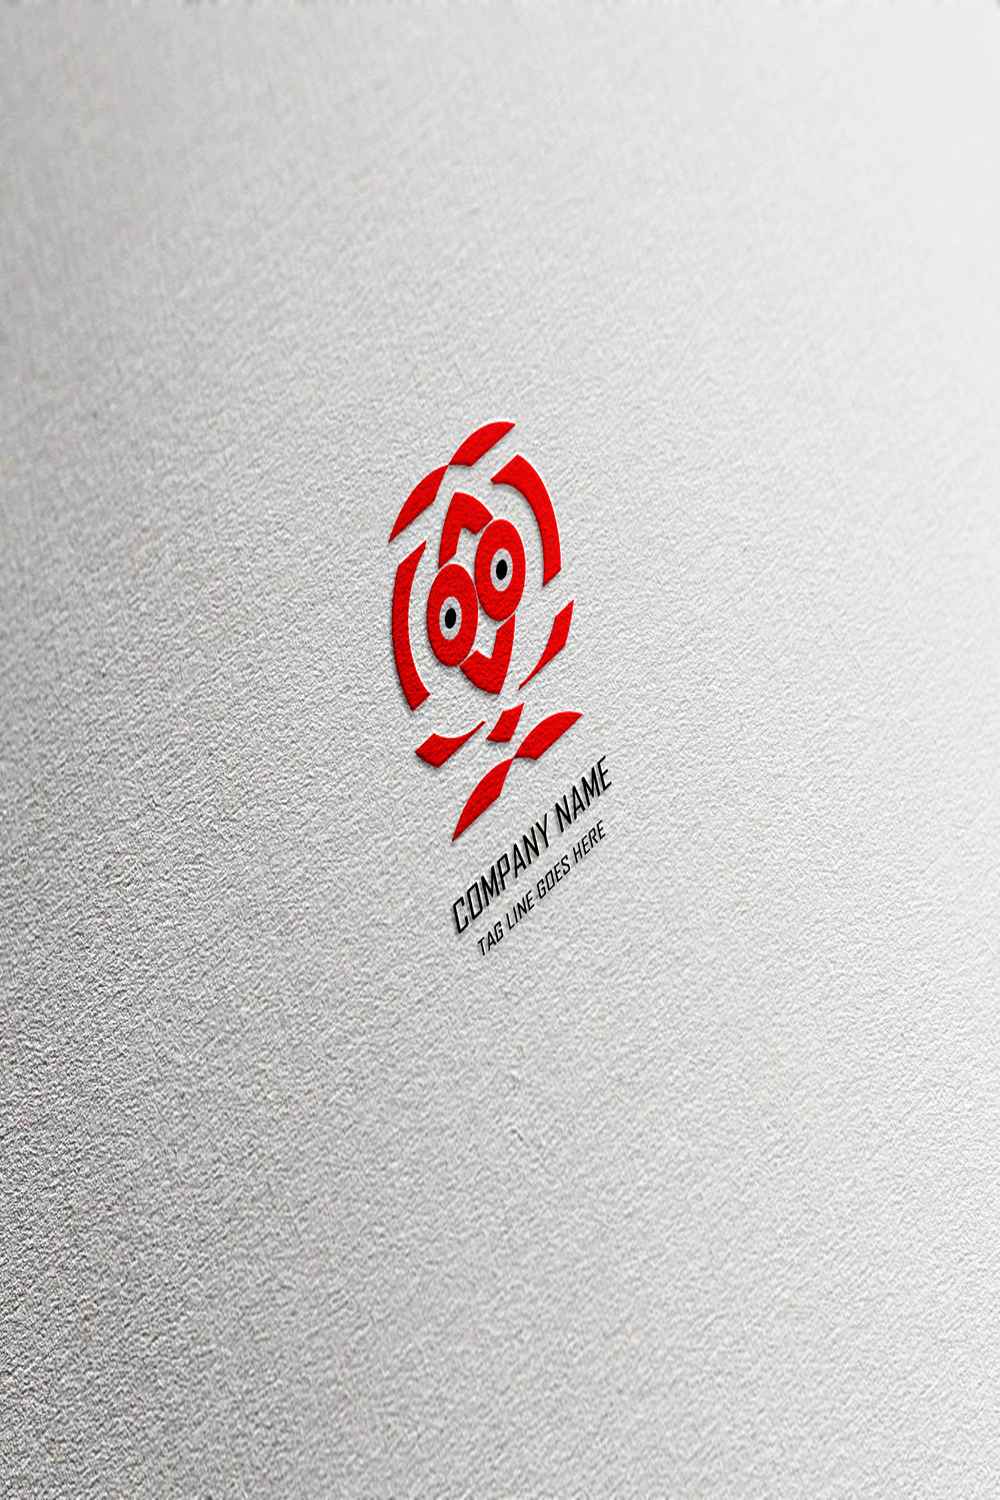 Owl - Logo Design Template pinterest preview image.